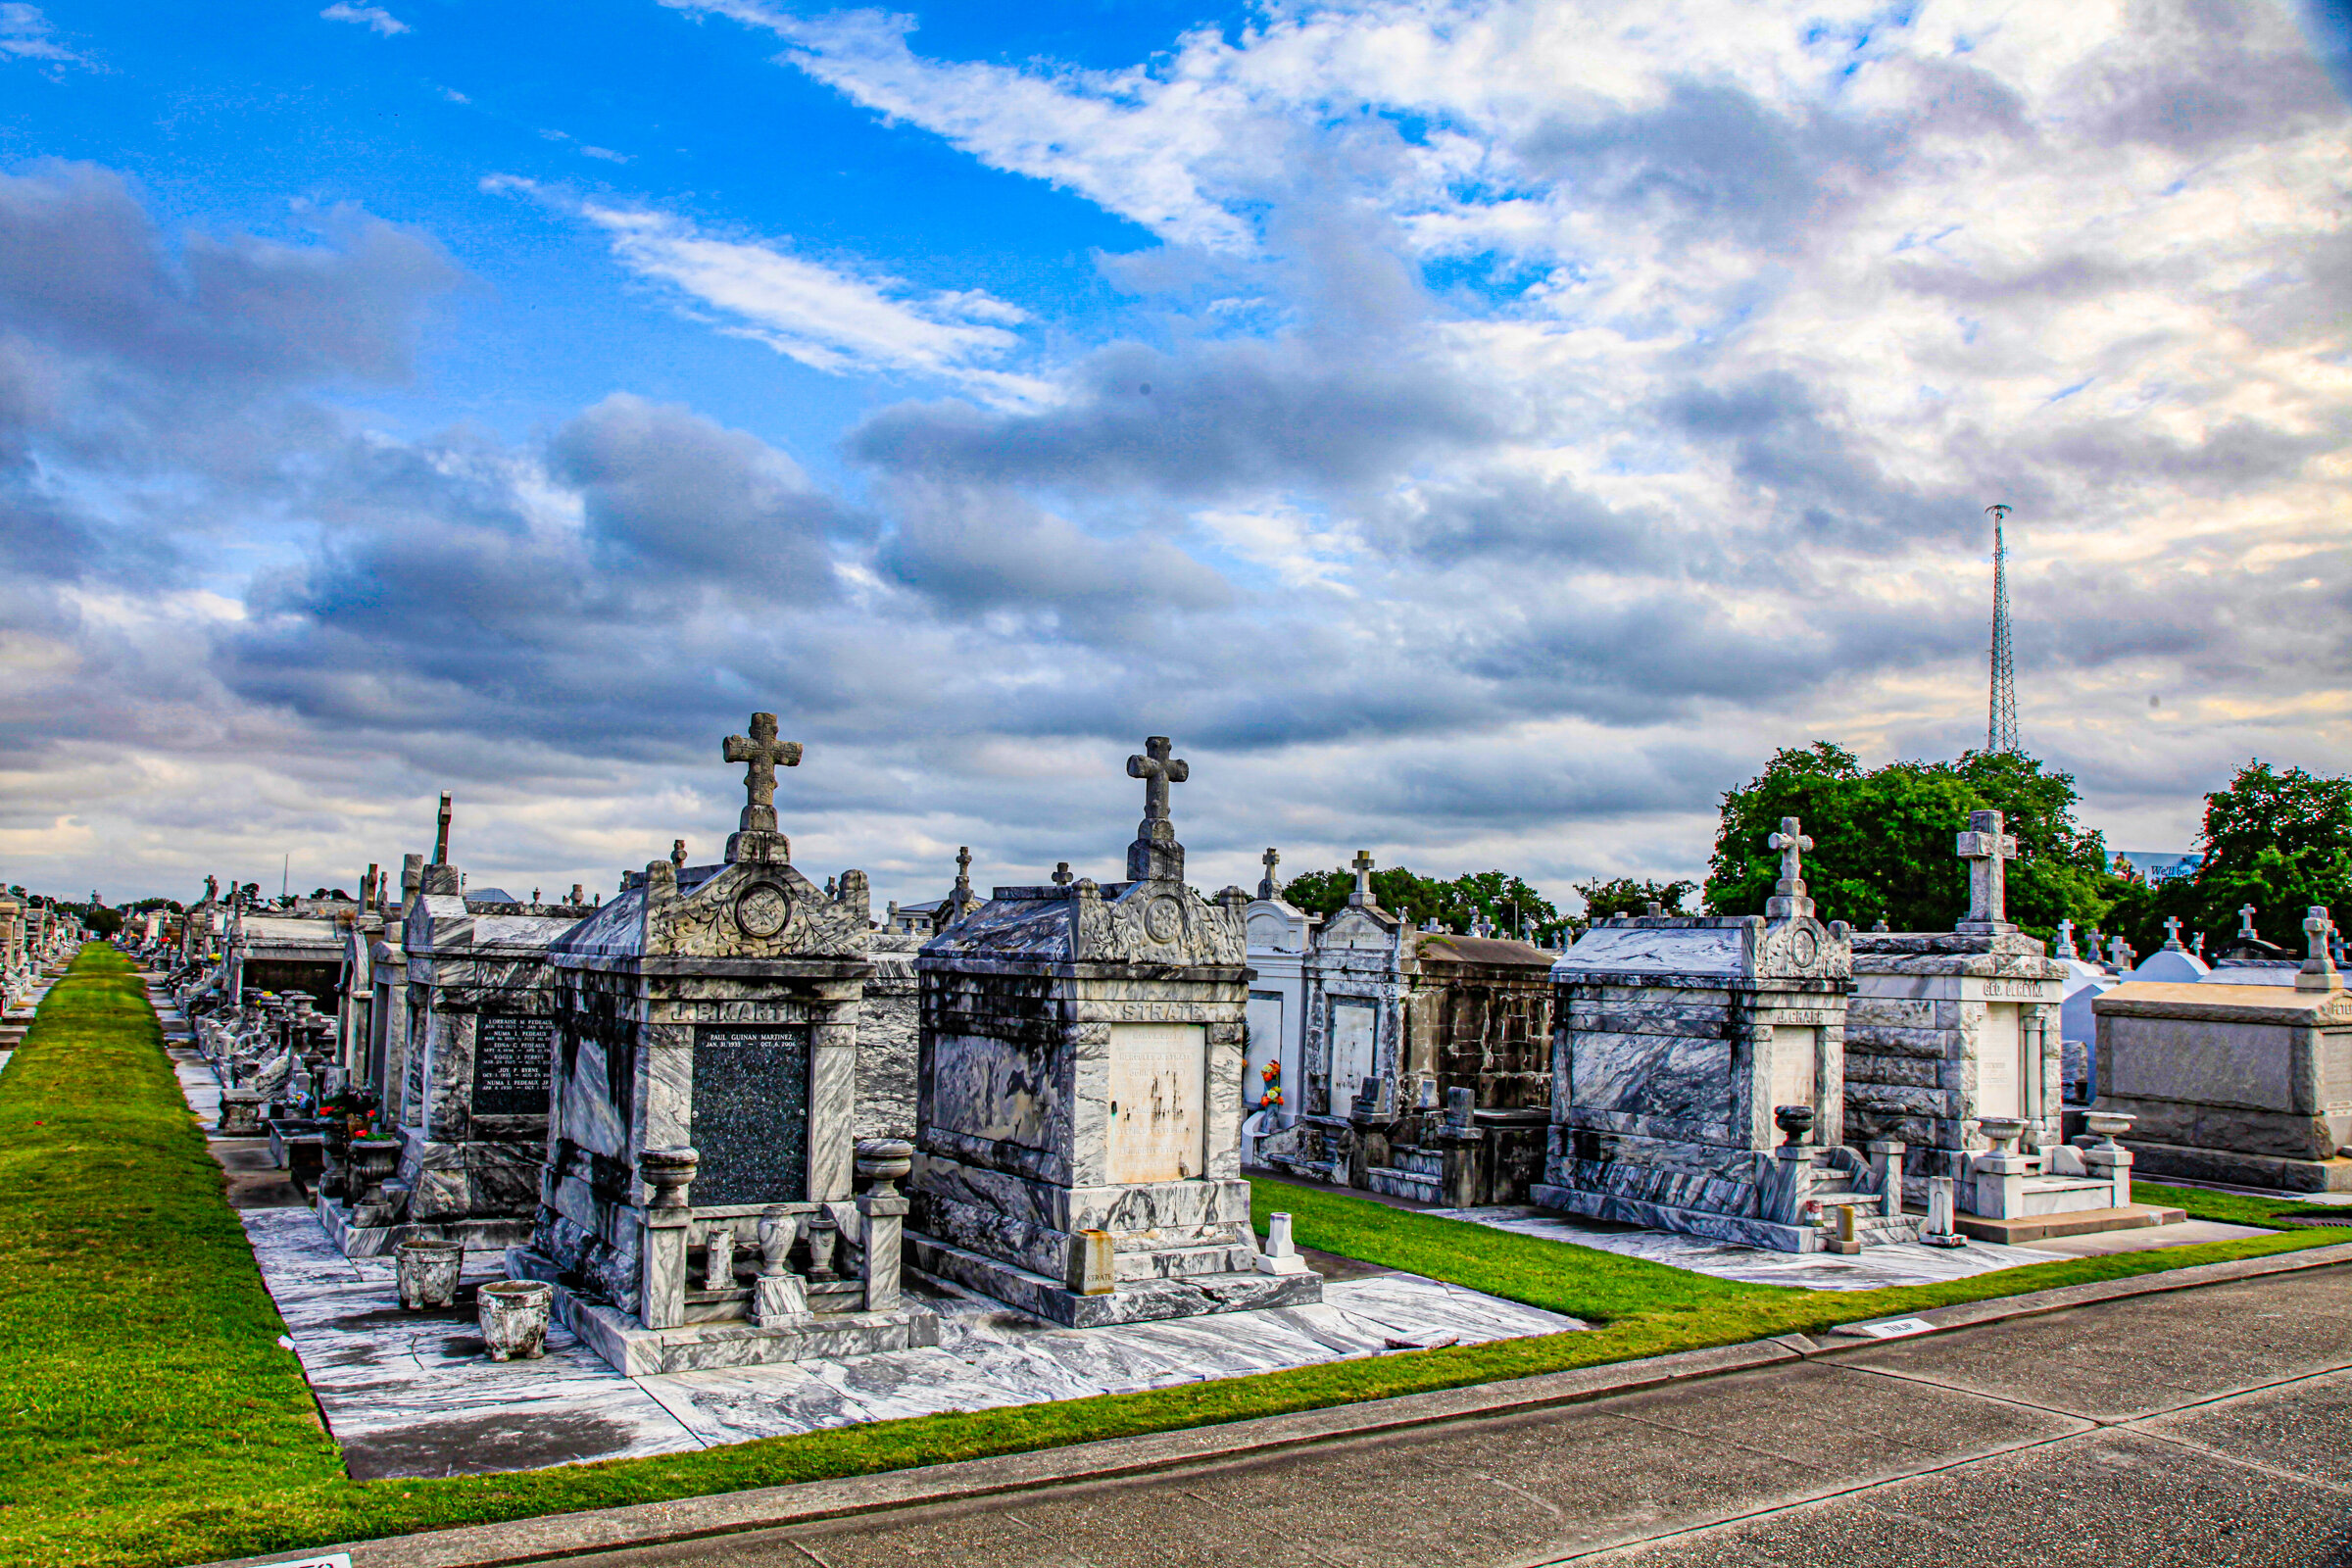  Greenwood Cemetery, Metairie, LA  USA 